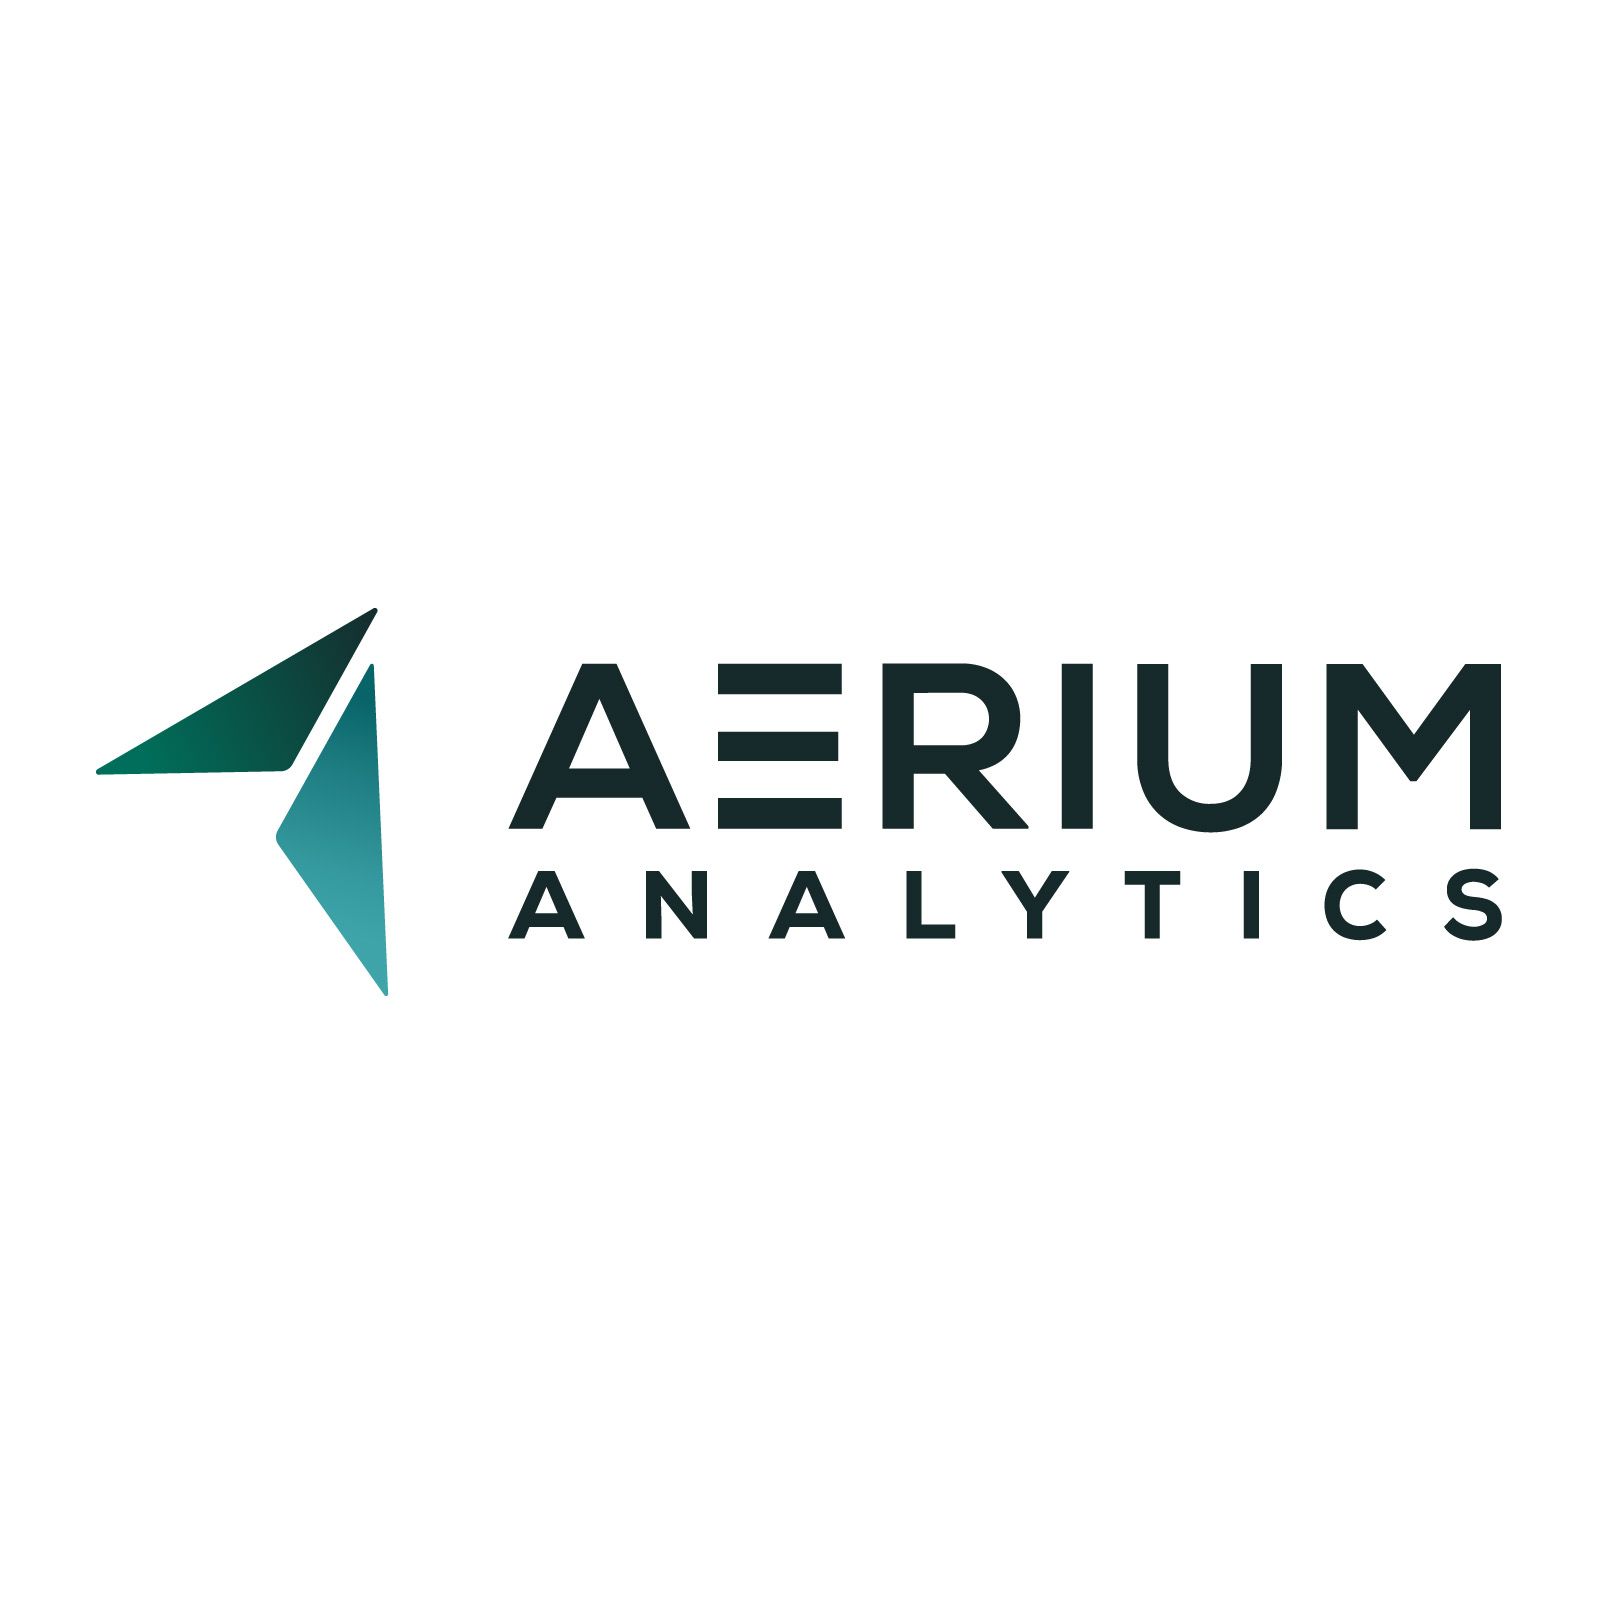 Aerium Analytics square logo with white background